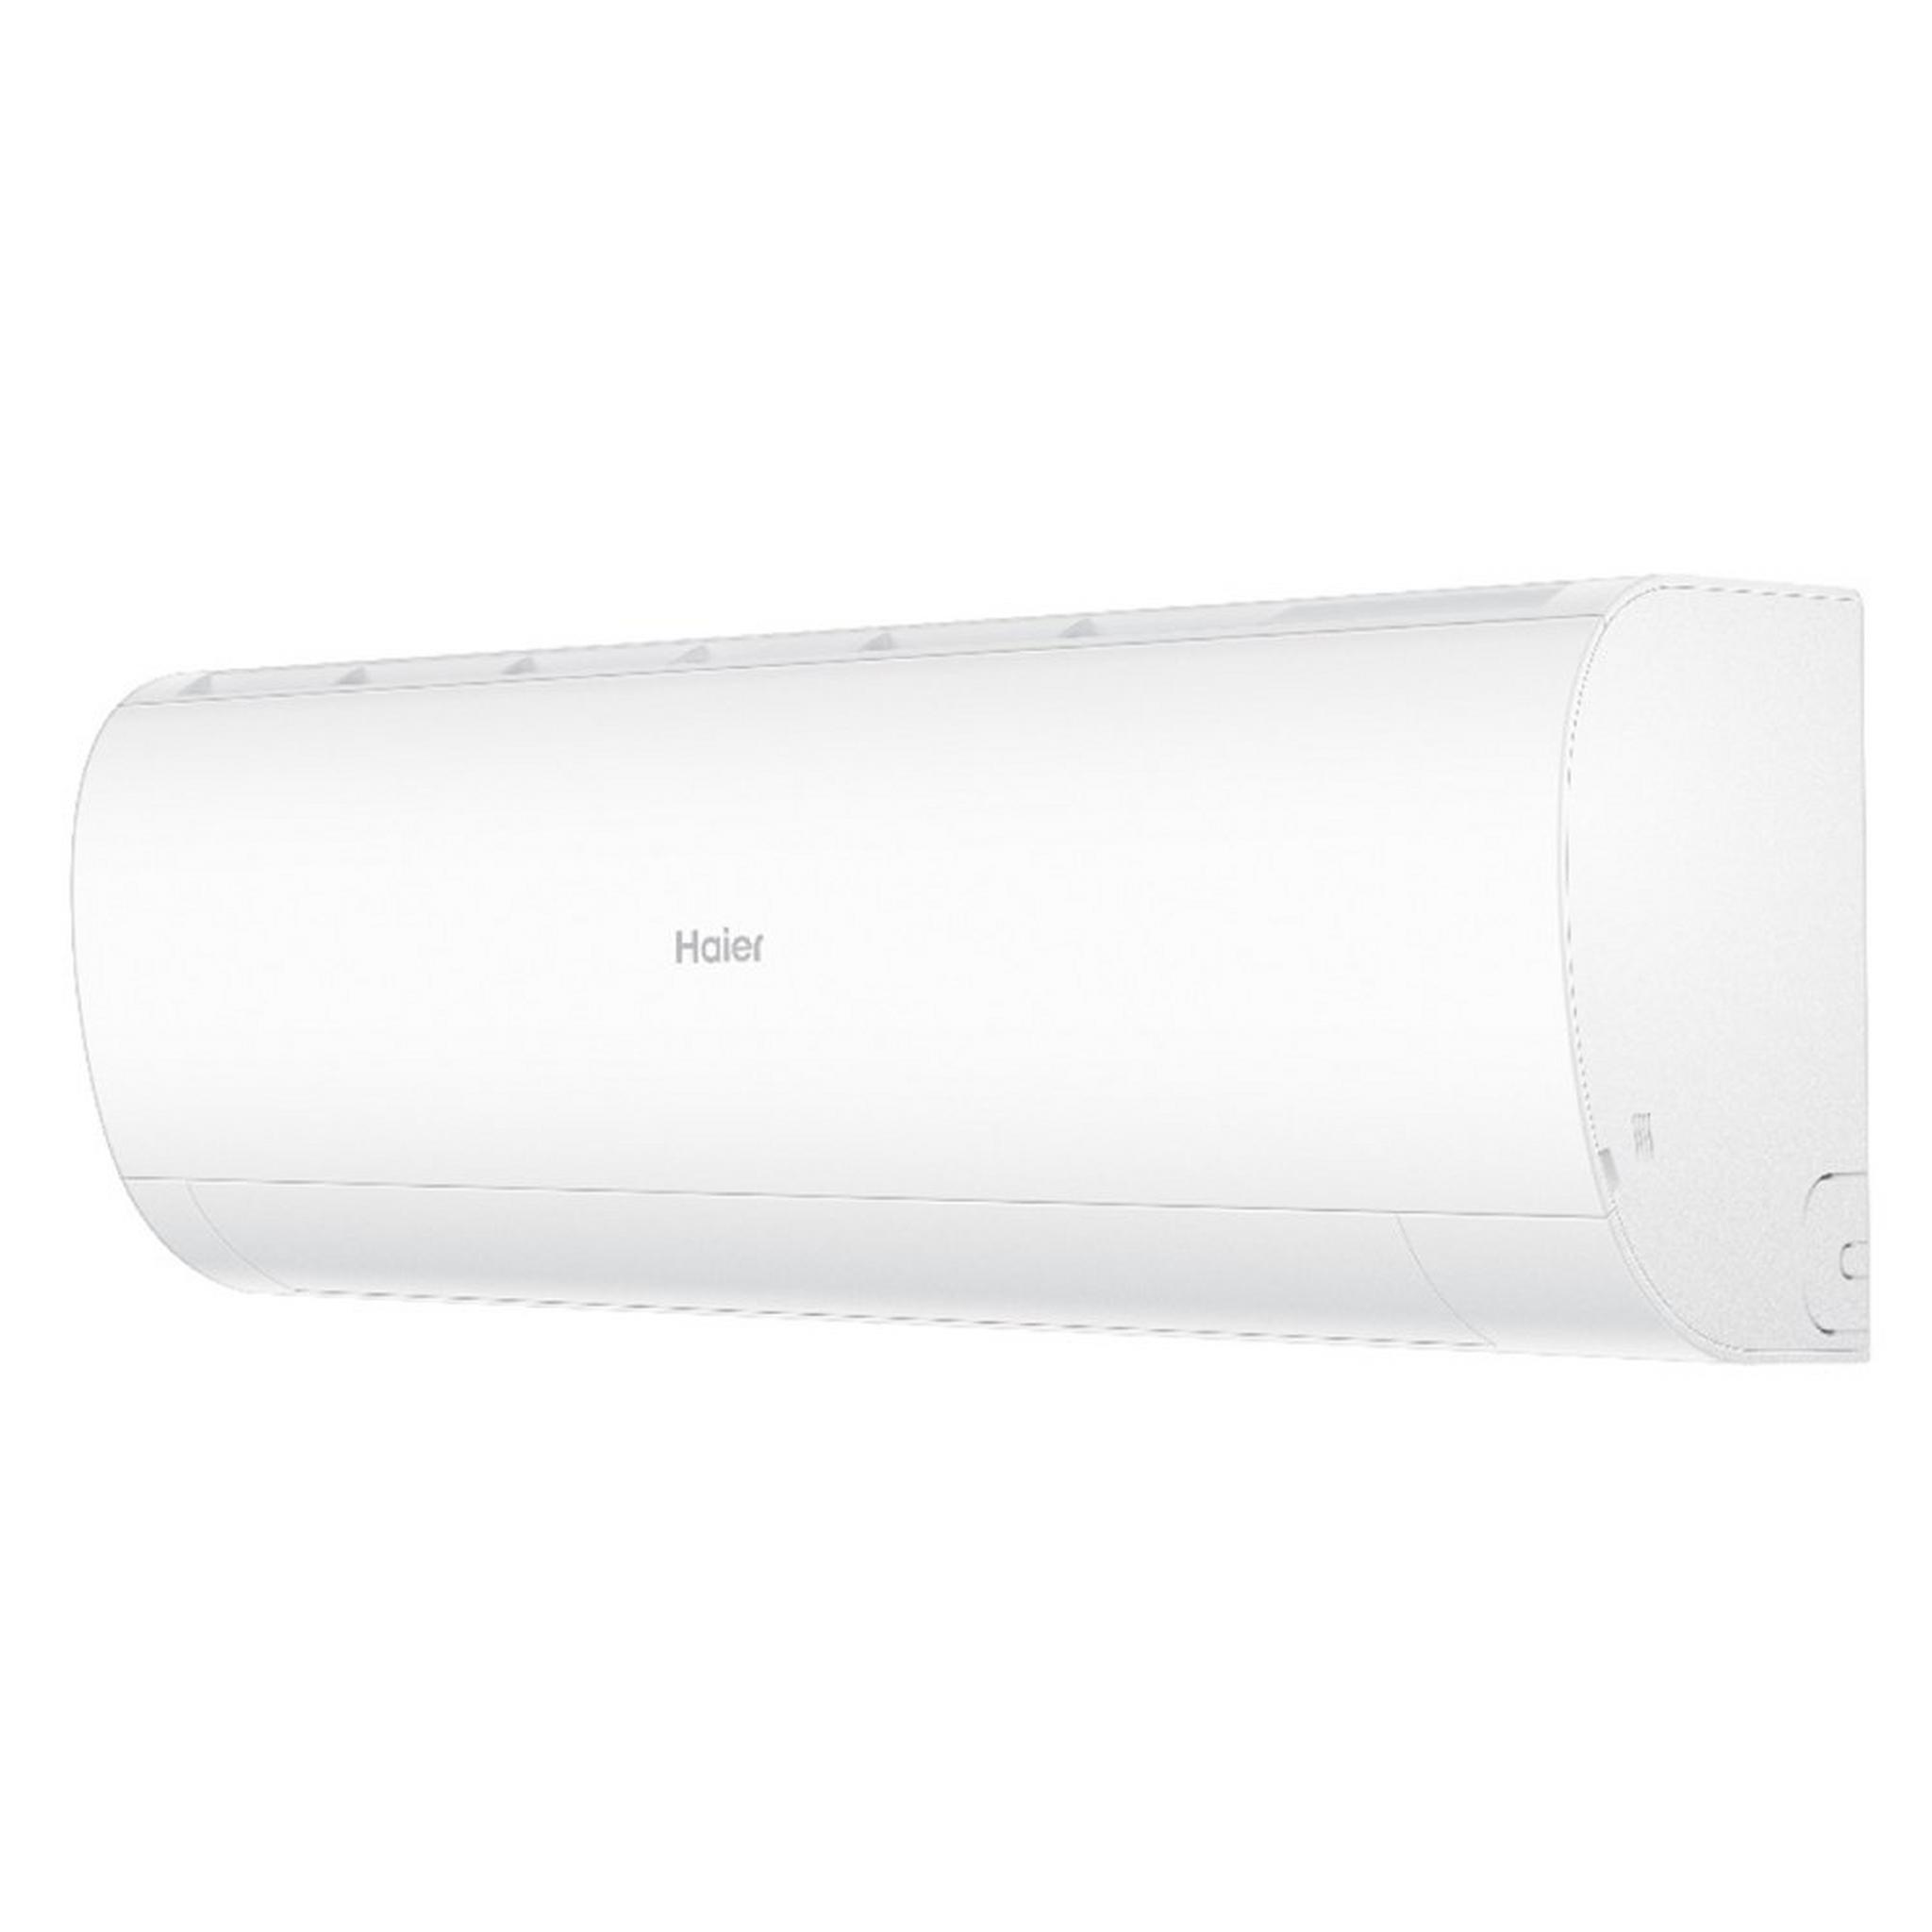 Haier Split AC With UV, 15000 BTU, Cooling Only (HSU-18LPA03/R2(T3/) - White